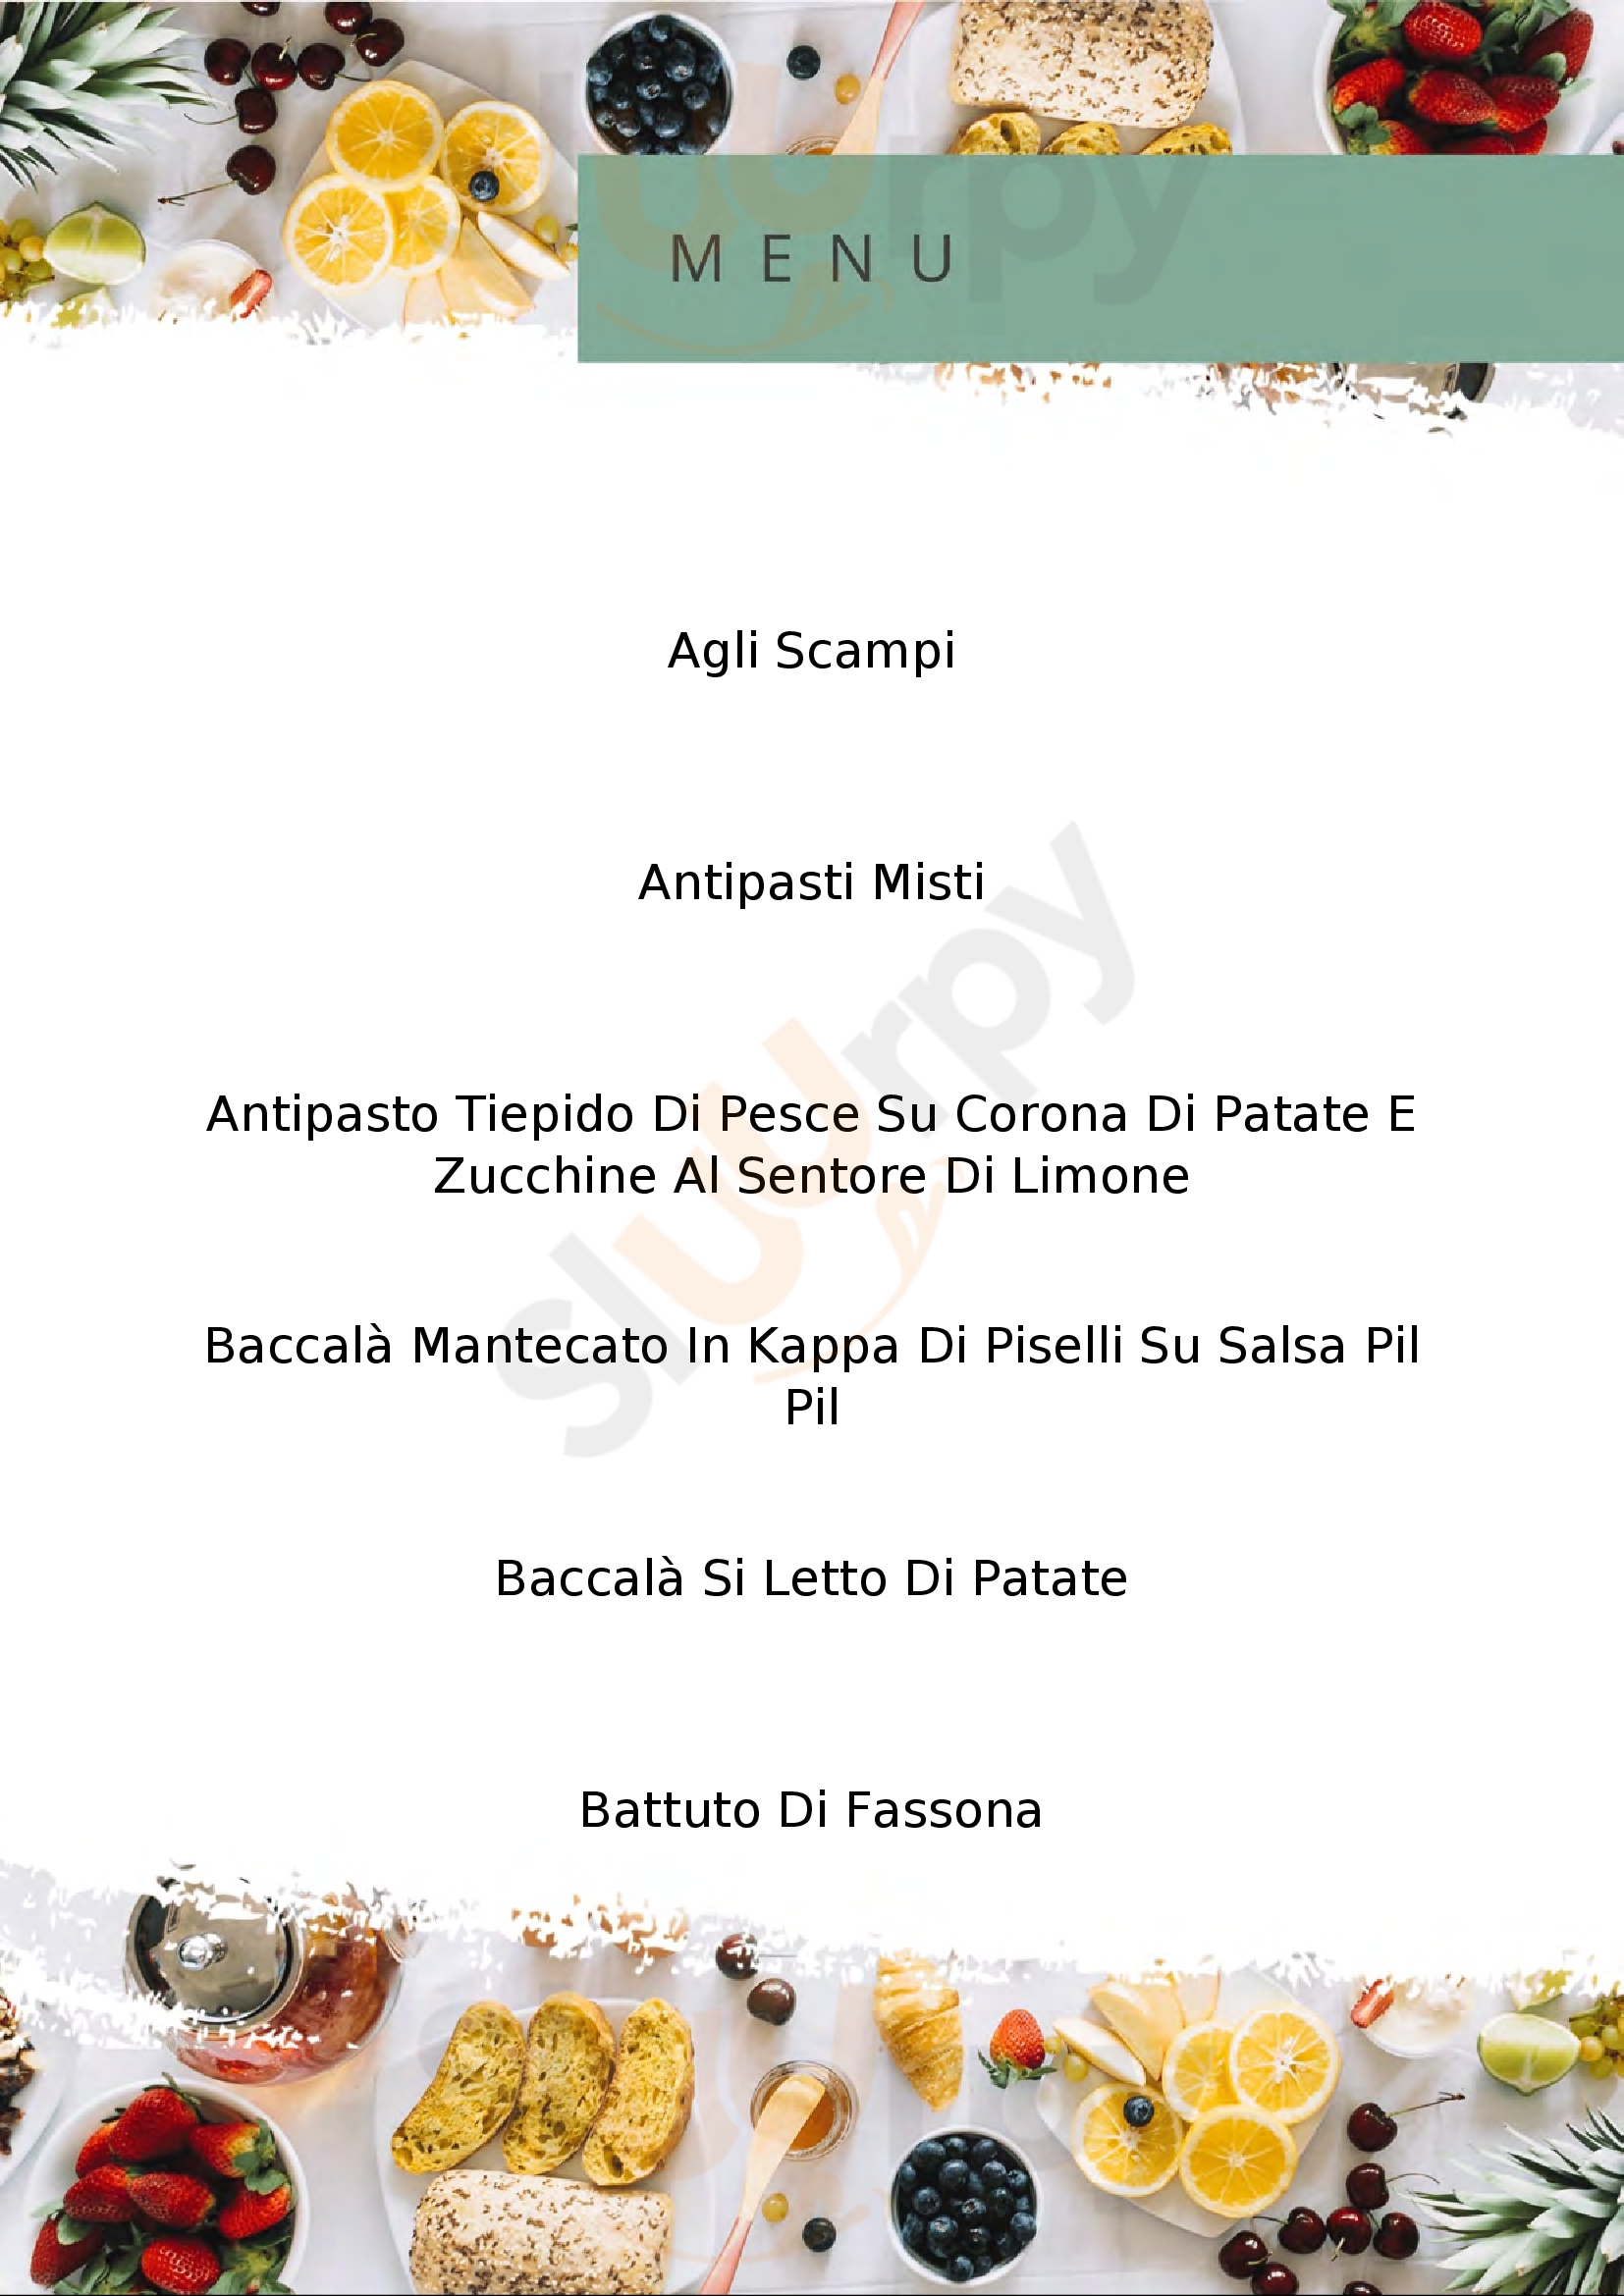 Nero Restaurant Barletta menù 1 pagina